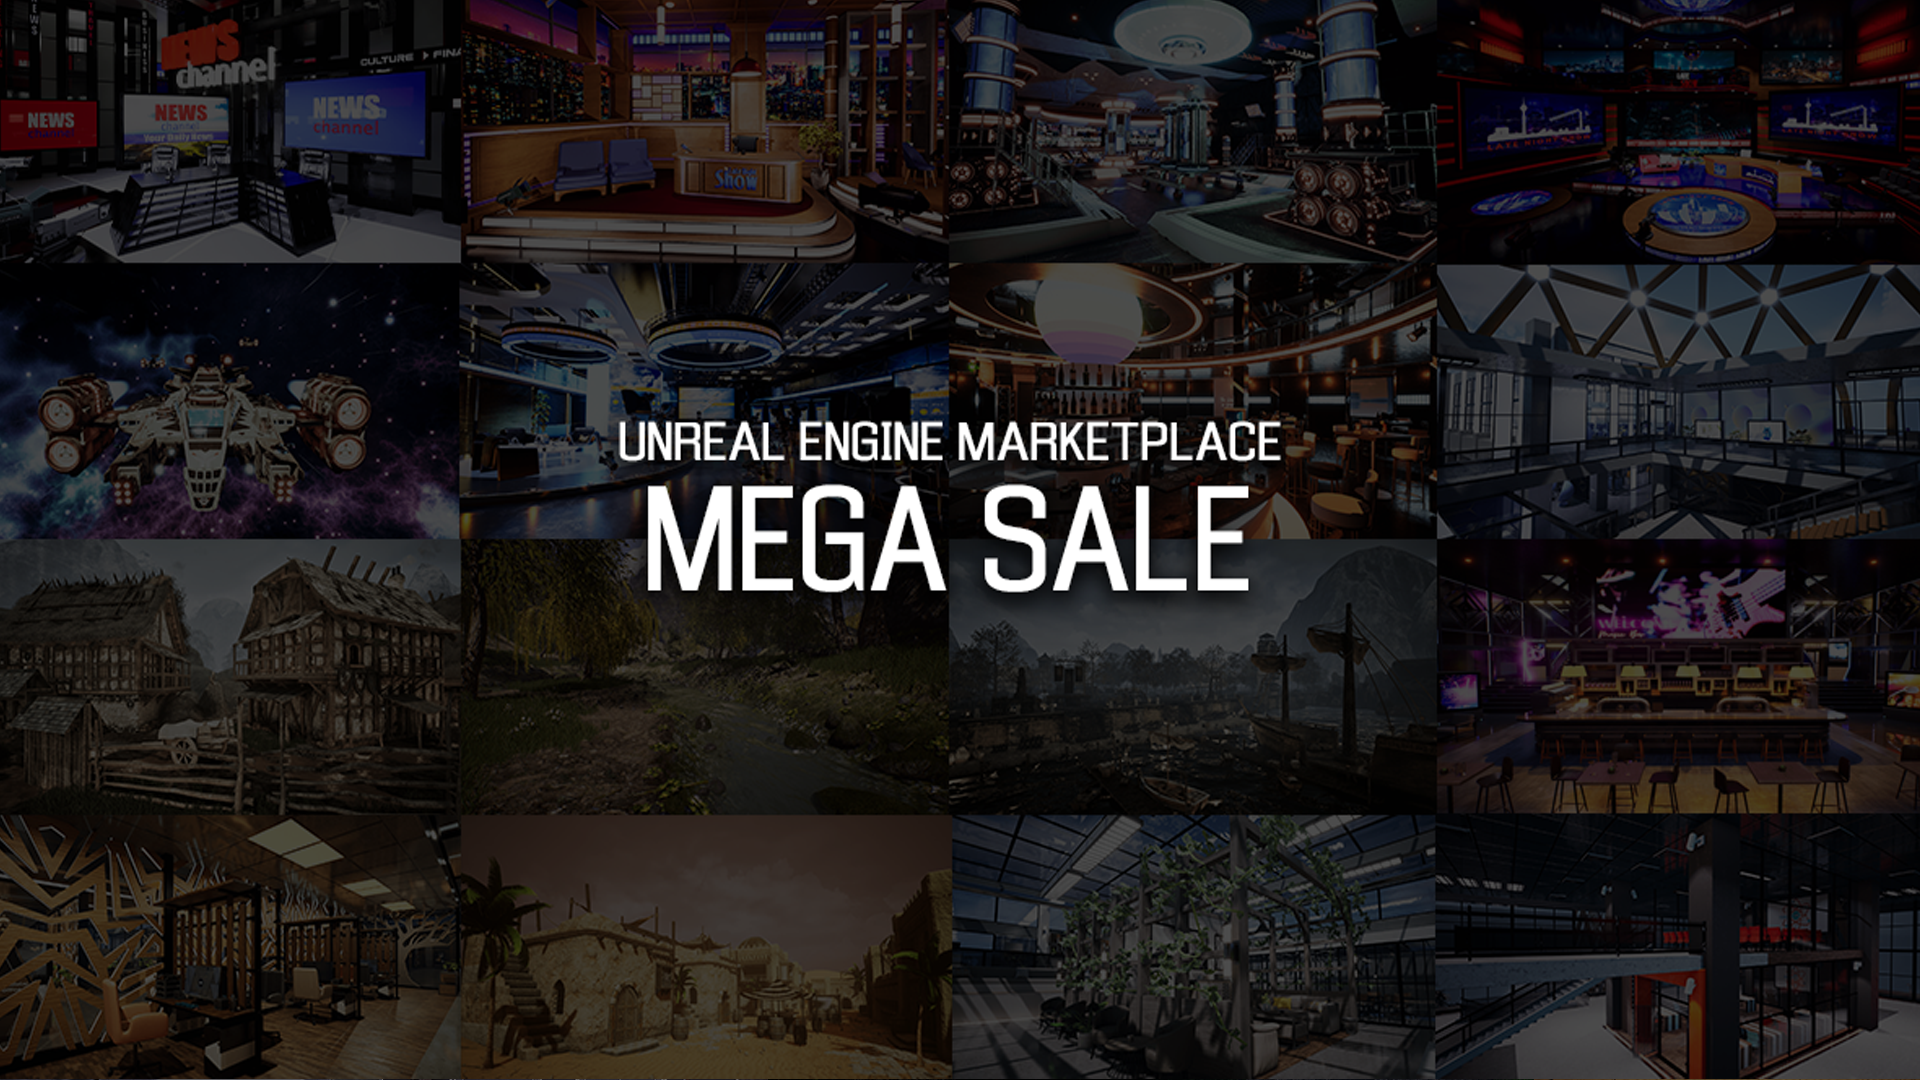 Promotional image for Mega Sale hosted by Unreal Engine Marketplace